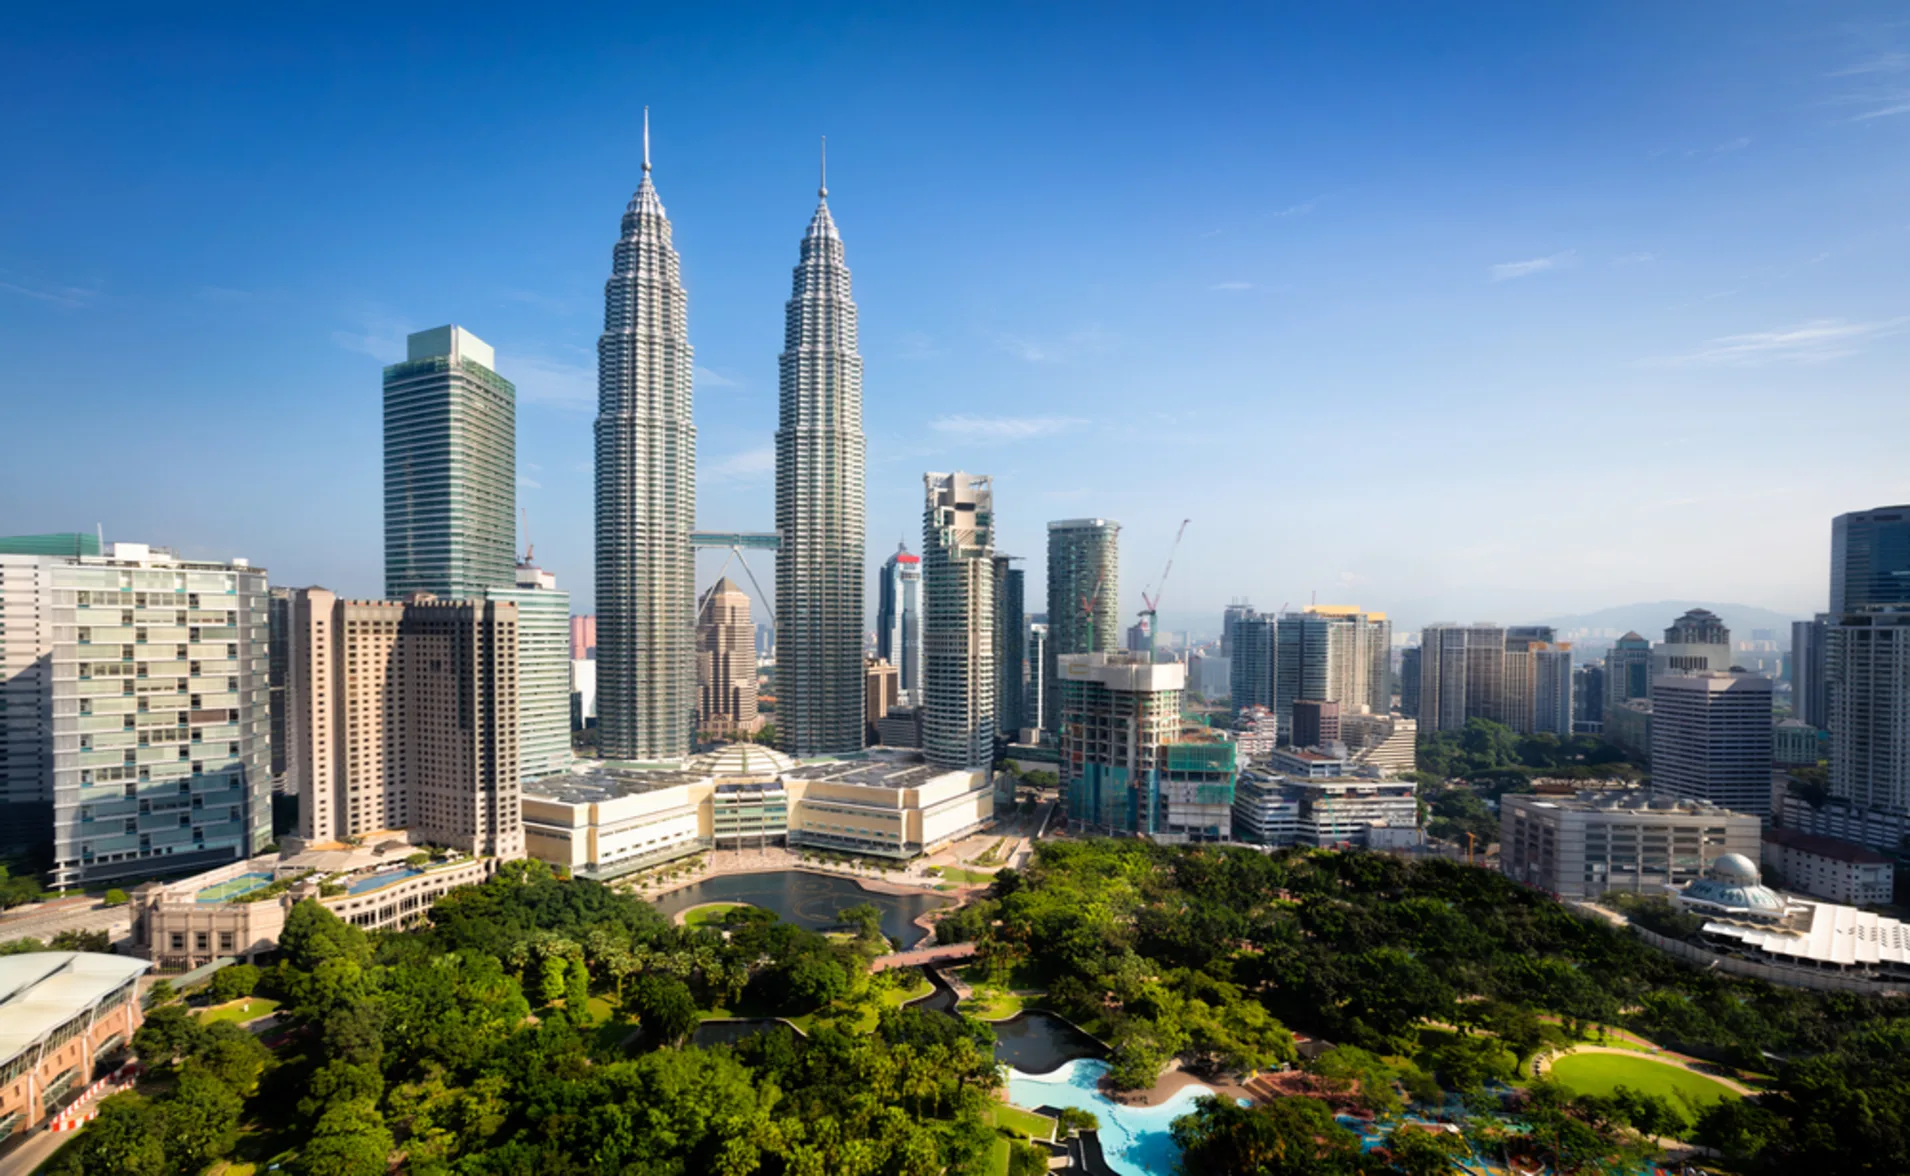 Kuala Lumpur city skyline in daytime with Petronas Towers